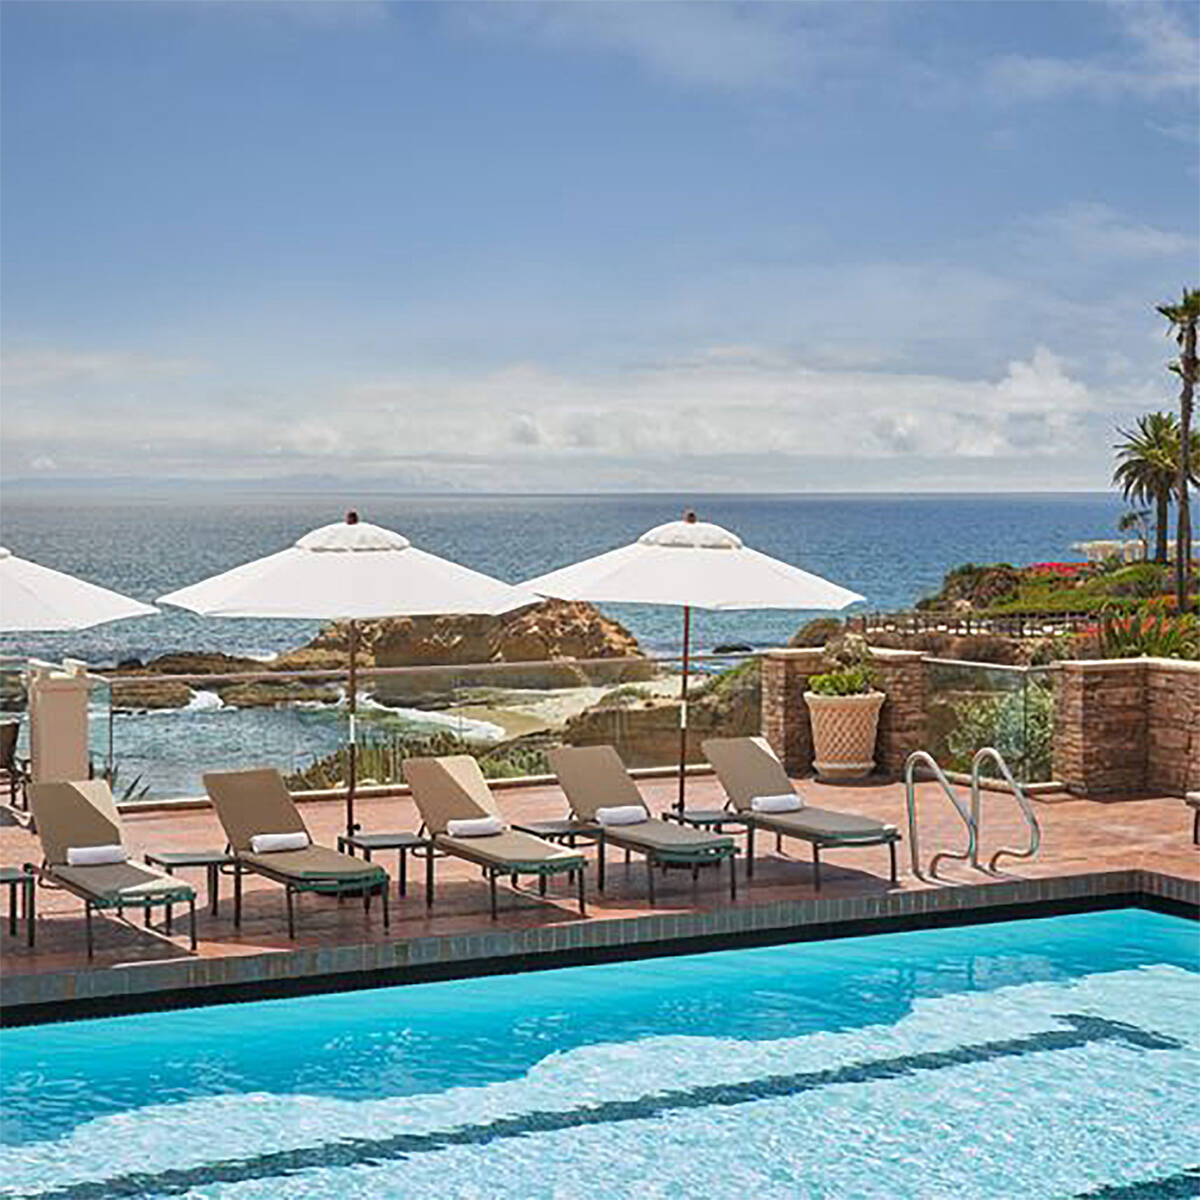 Houston billionaire Tilman Fertitta purchased the Montage Laguna Beach hotel in Laguna Beach, C ...